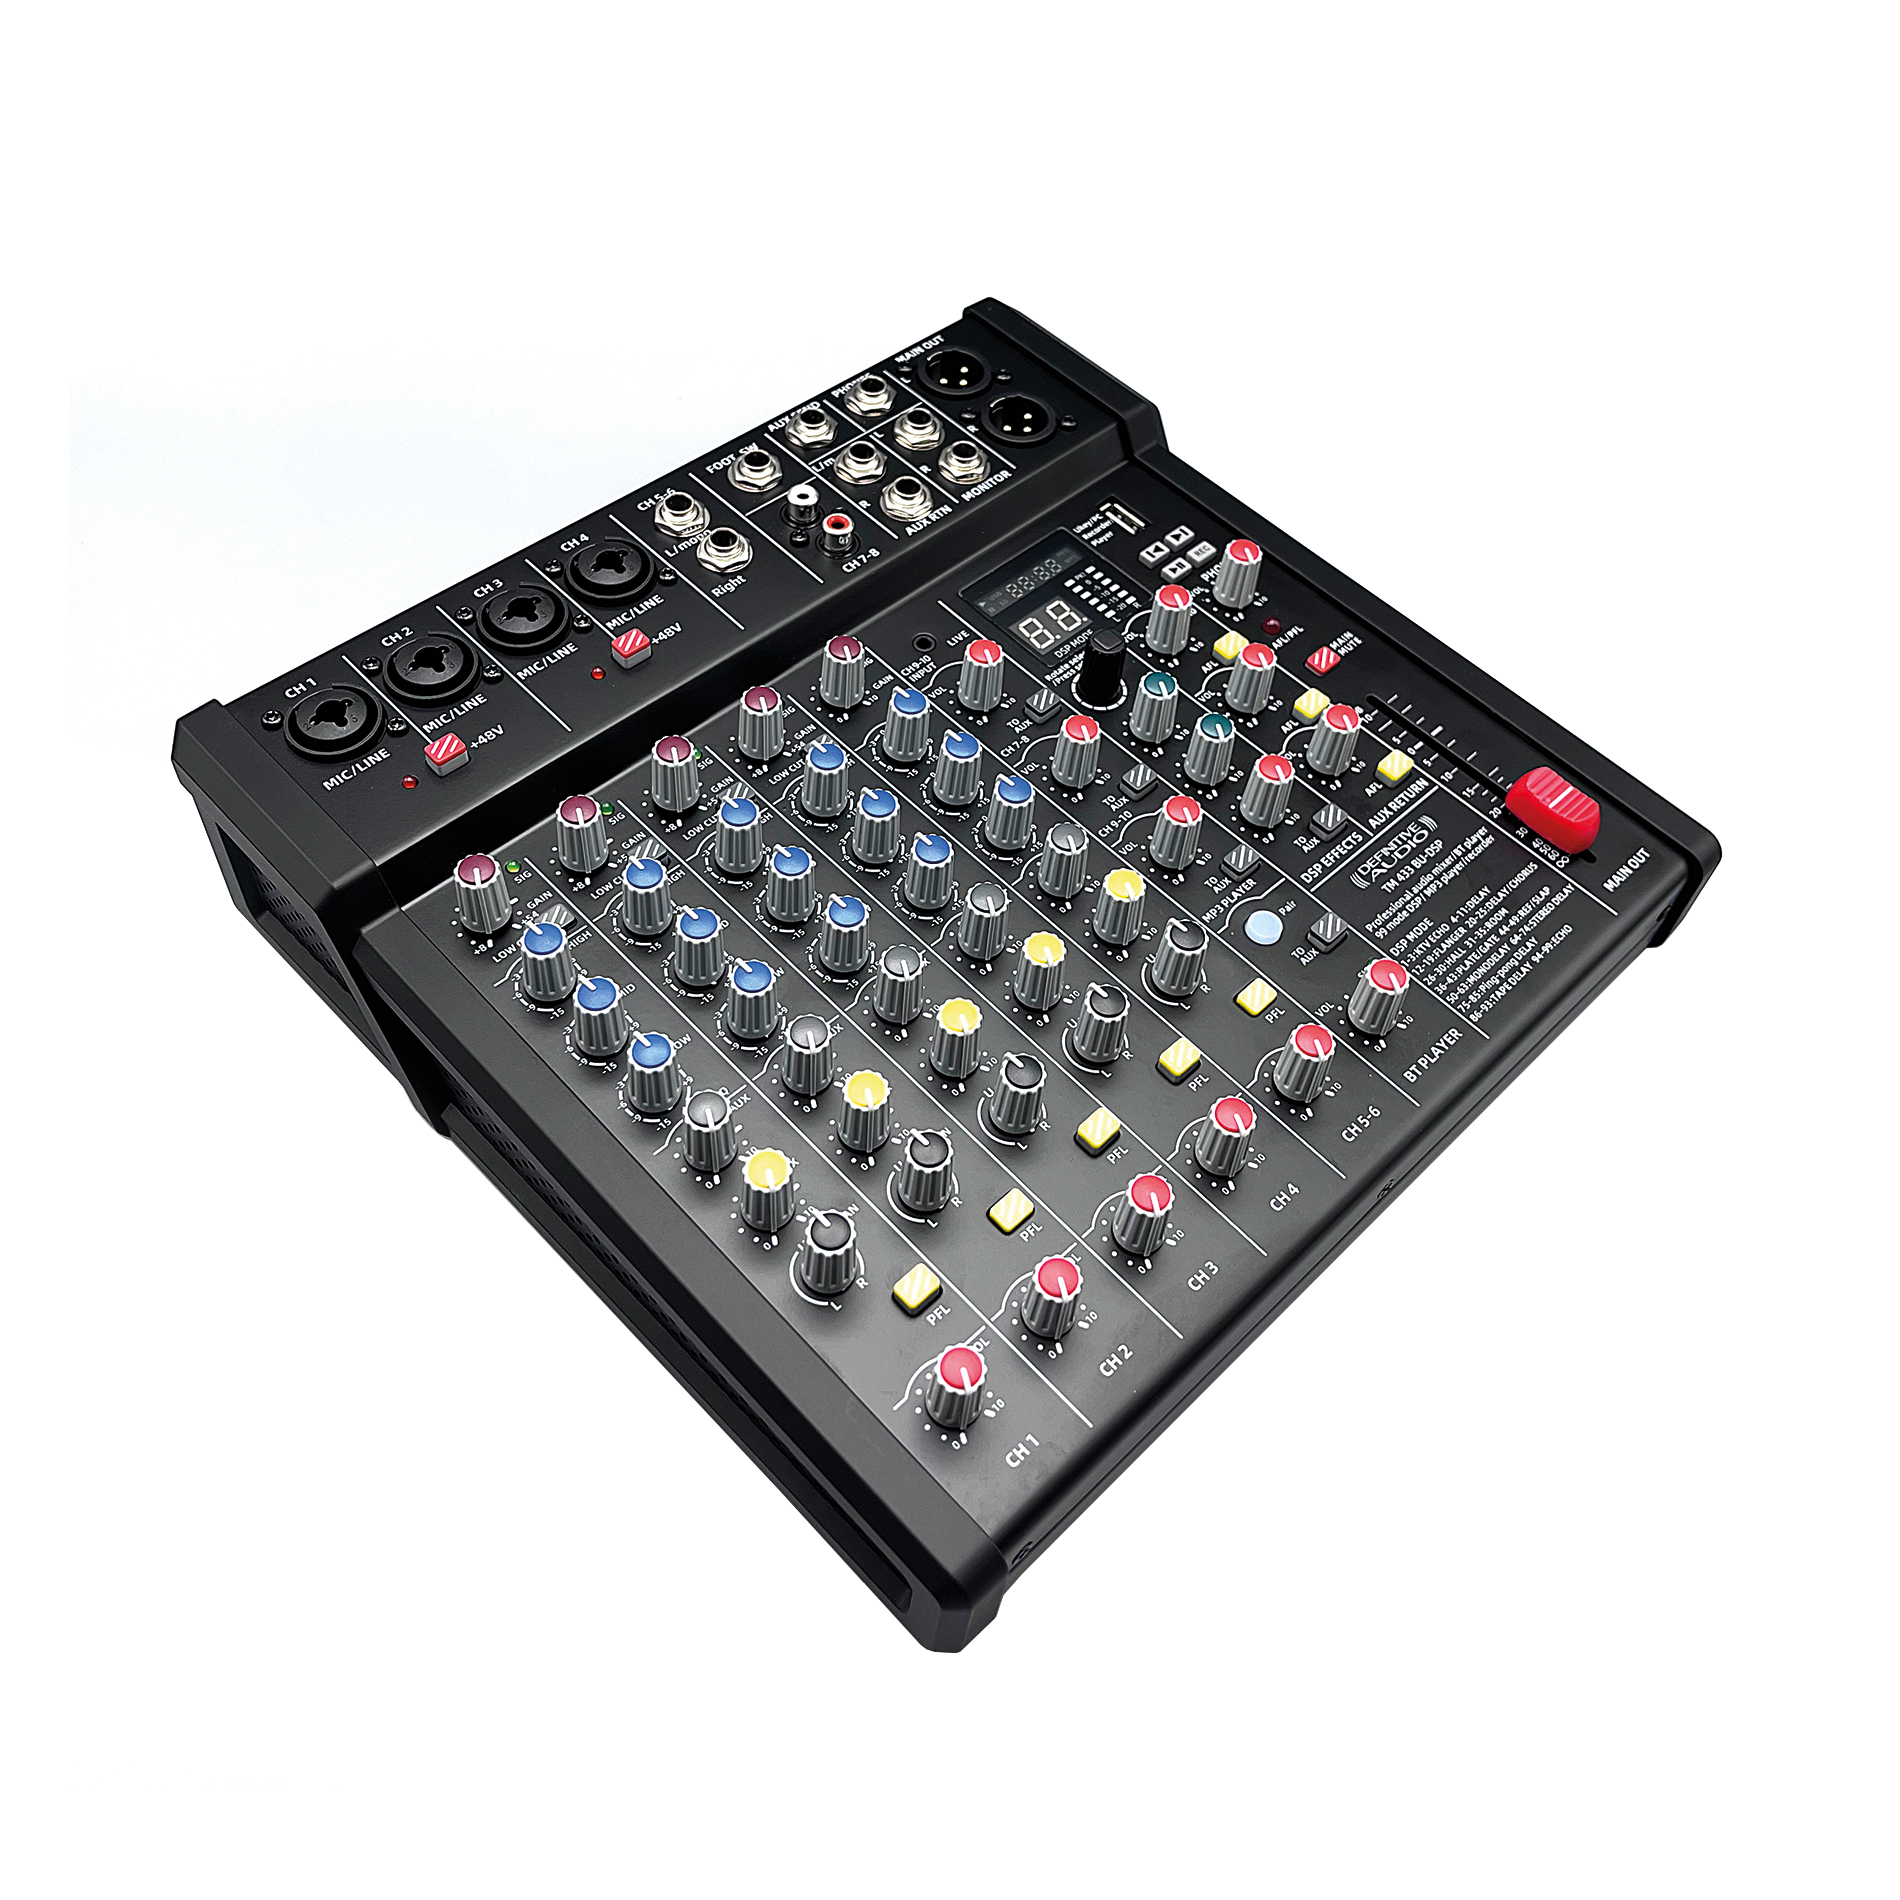 Definitive Audio Tm 433 Bu-dsp - Mesa de mezcla analógica - Variation 6